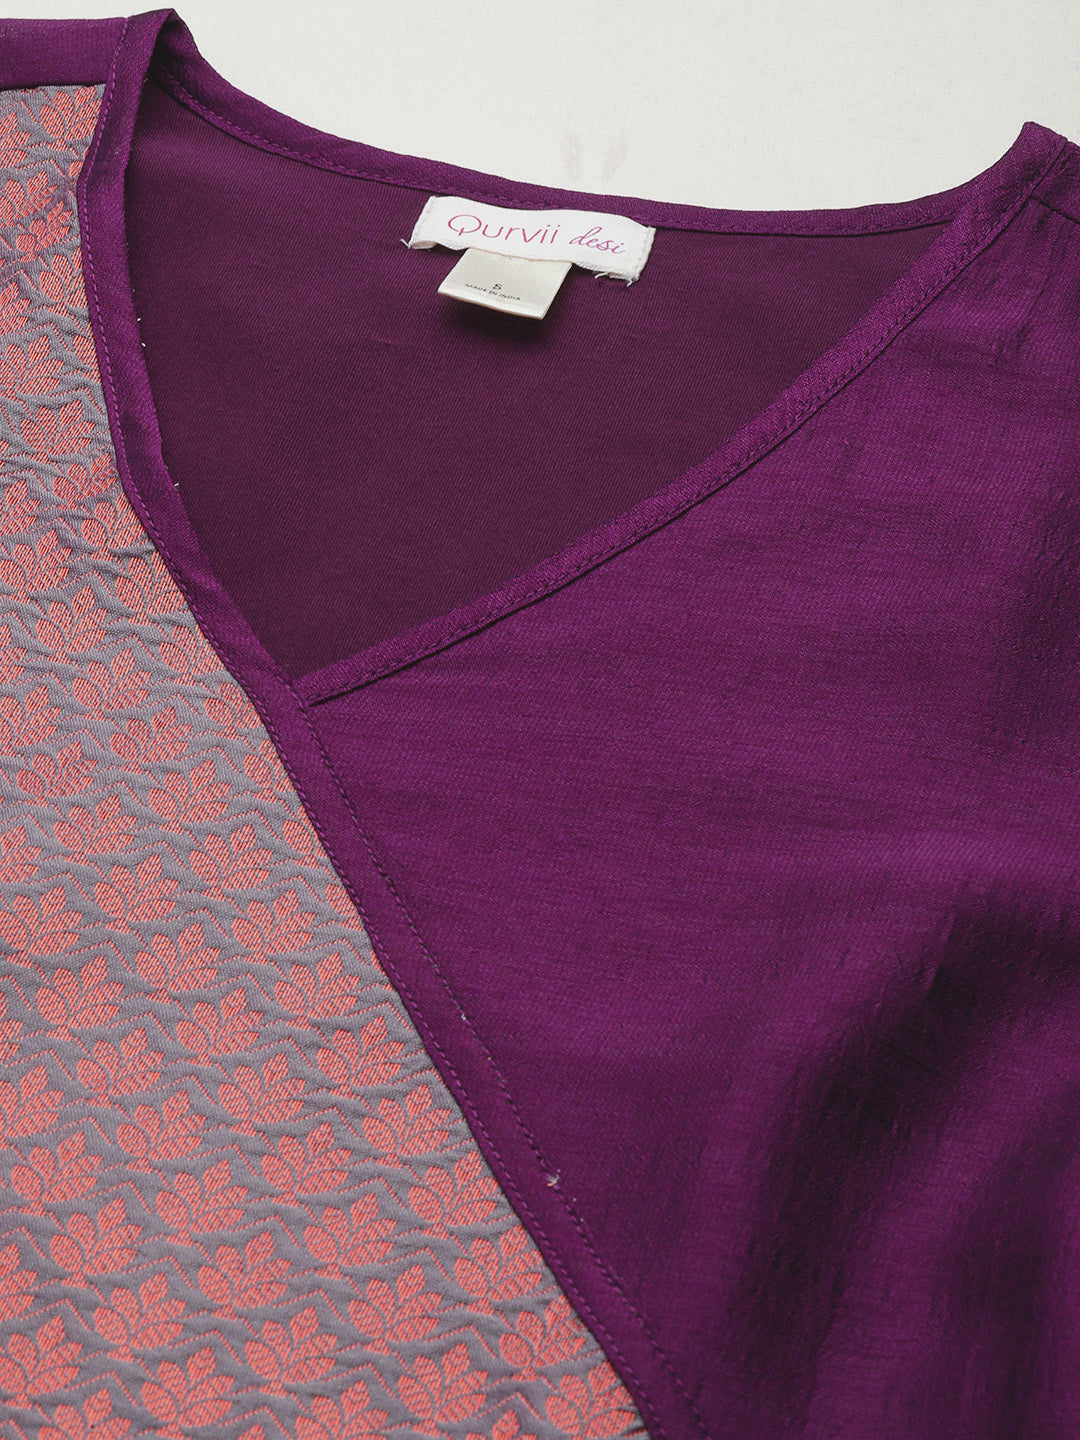 Burgundy Silk with Brocade yoke Party Dress